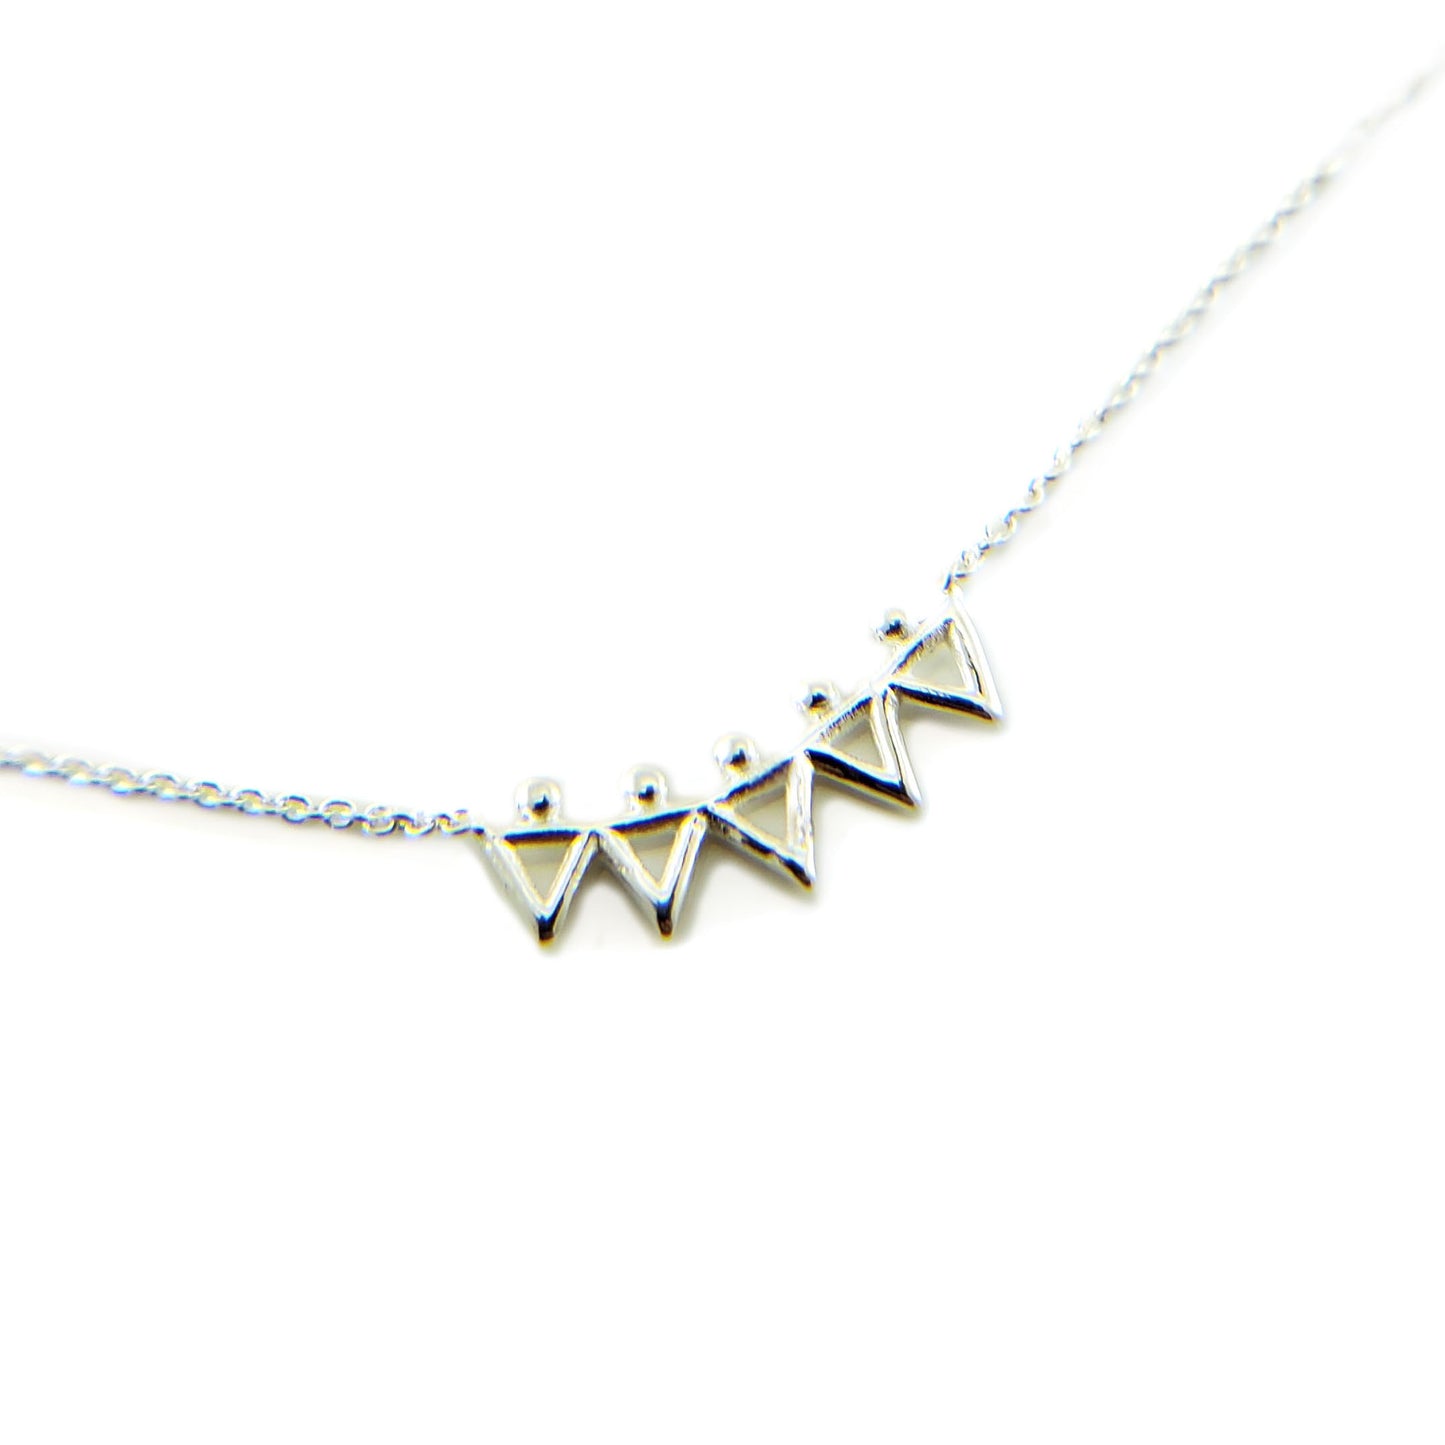 Mountain Symbol Necklace